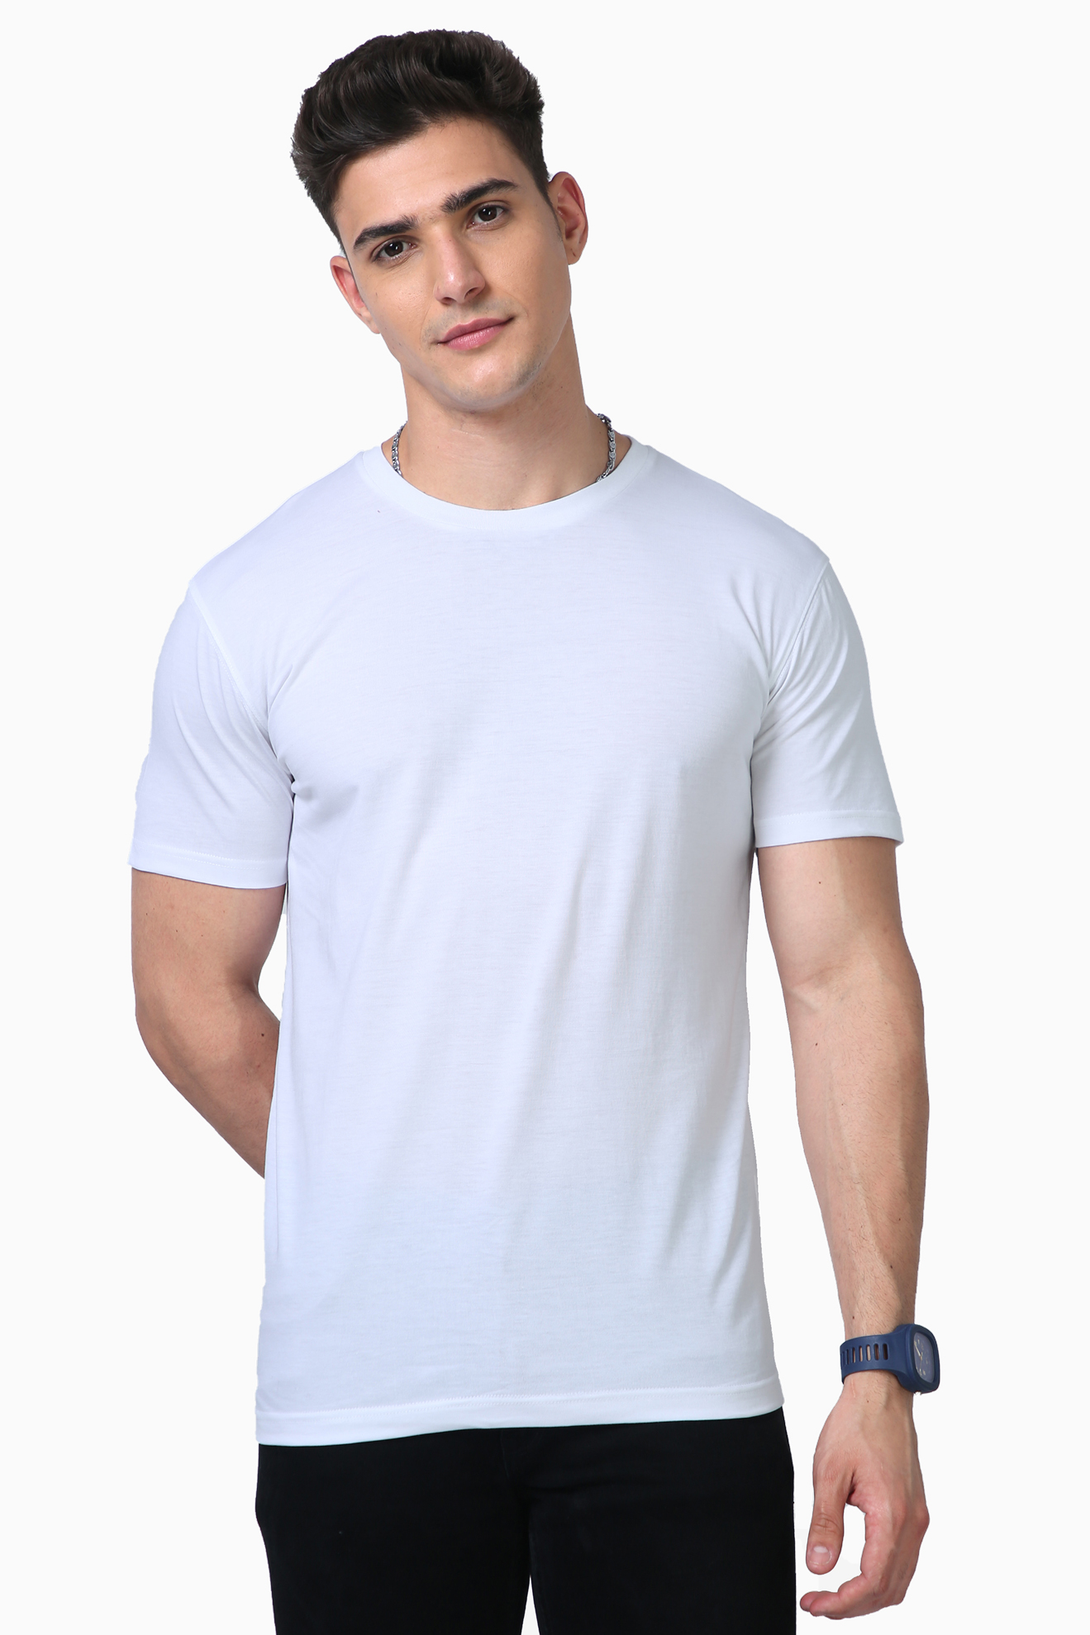 Plain Supima T-Shirts For Women - WowWaves - 2